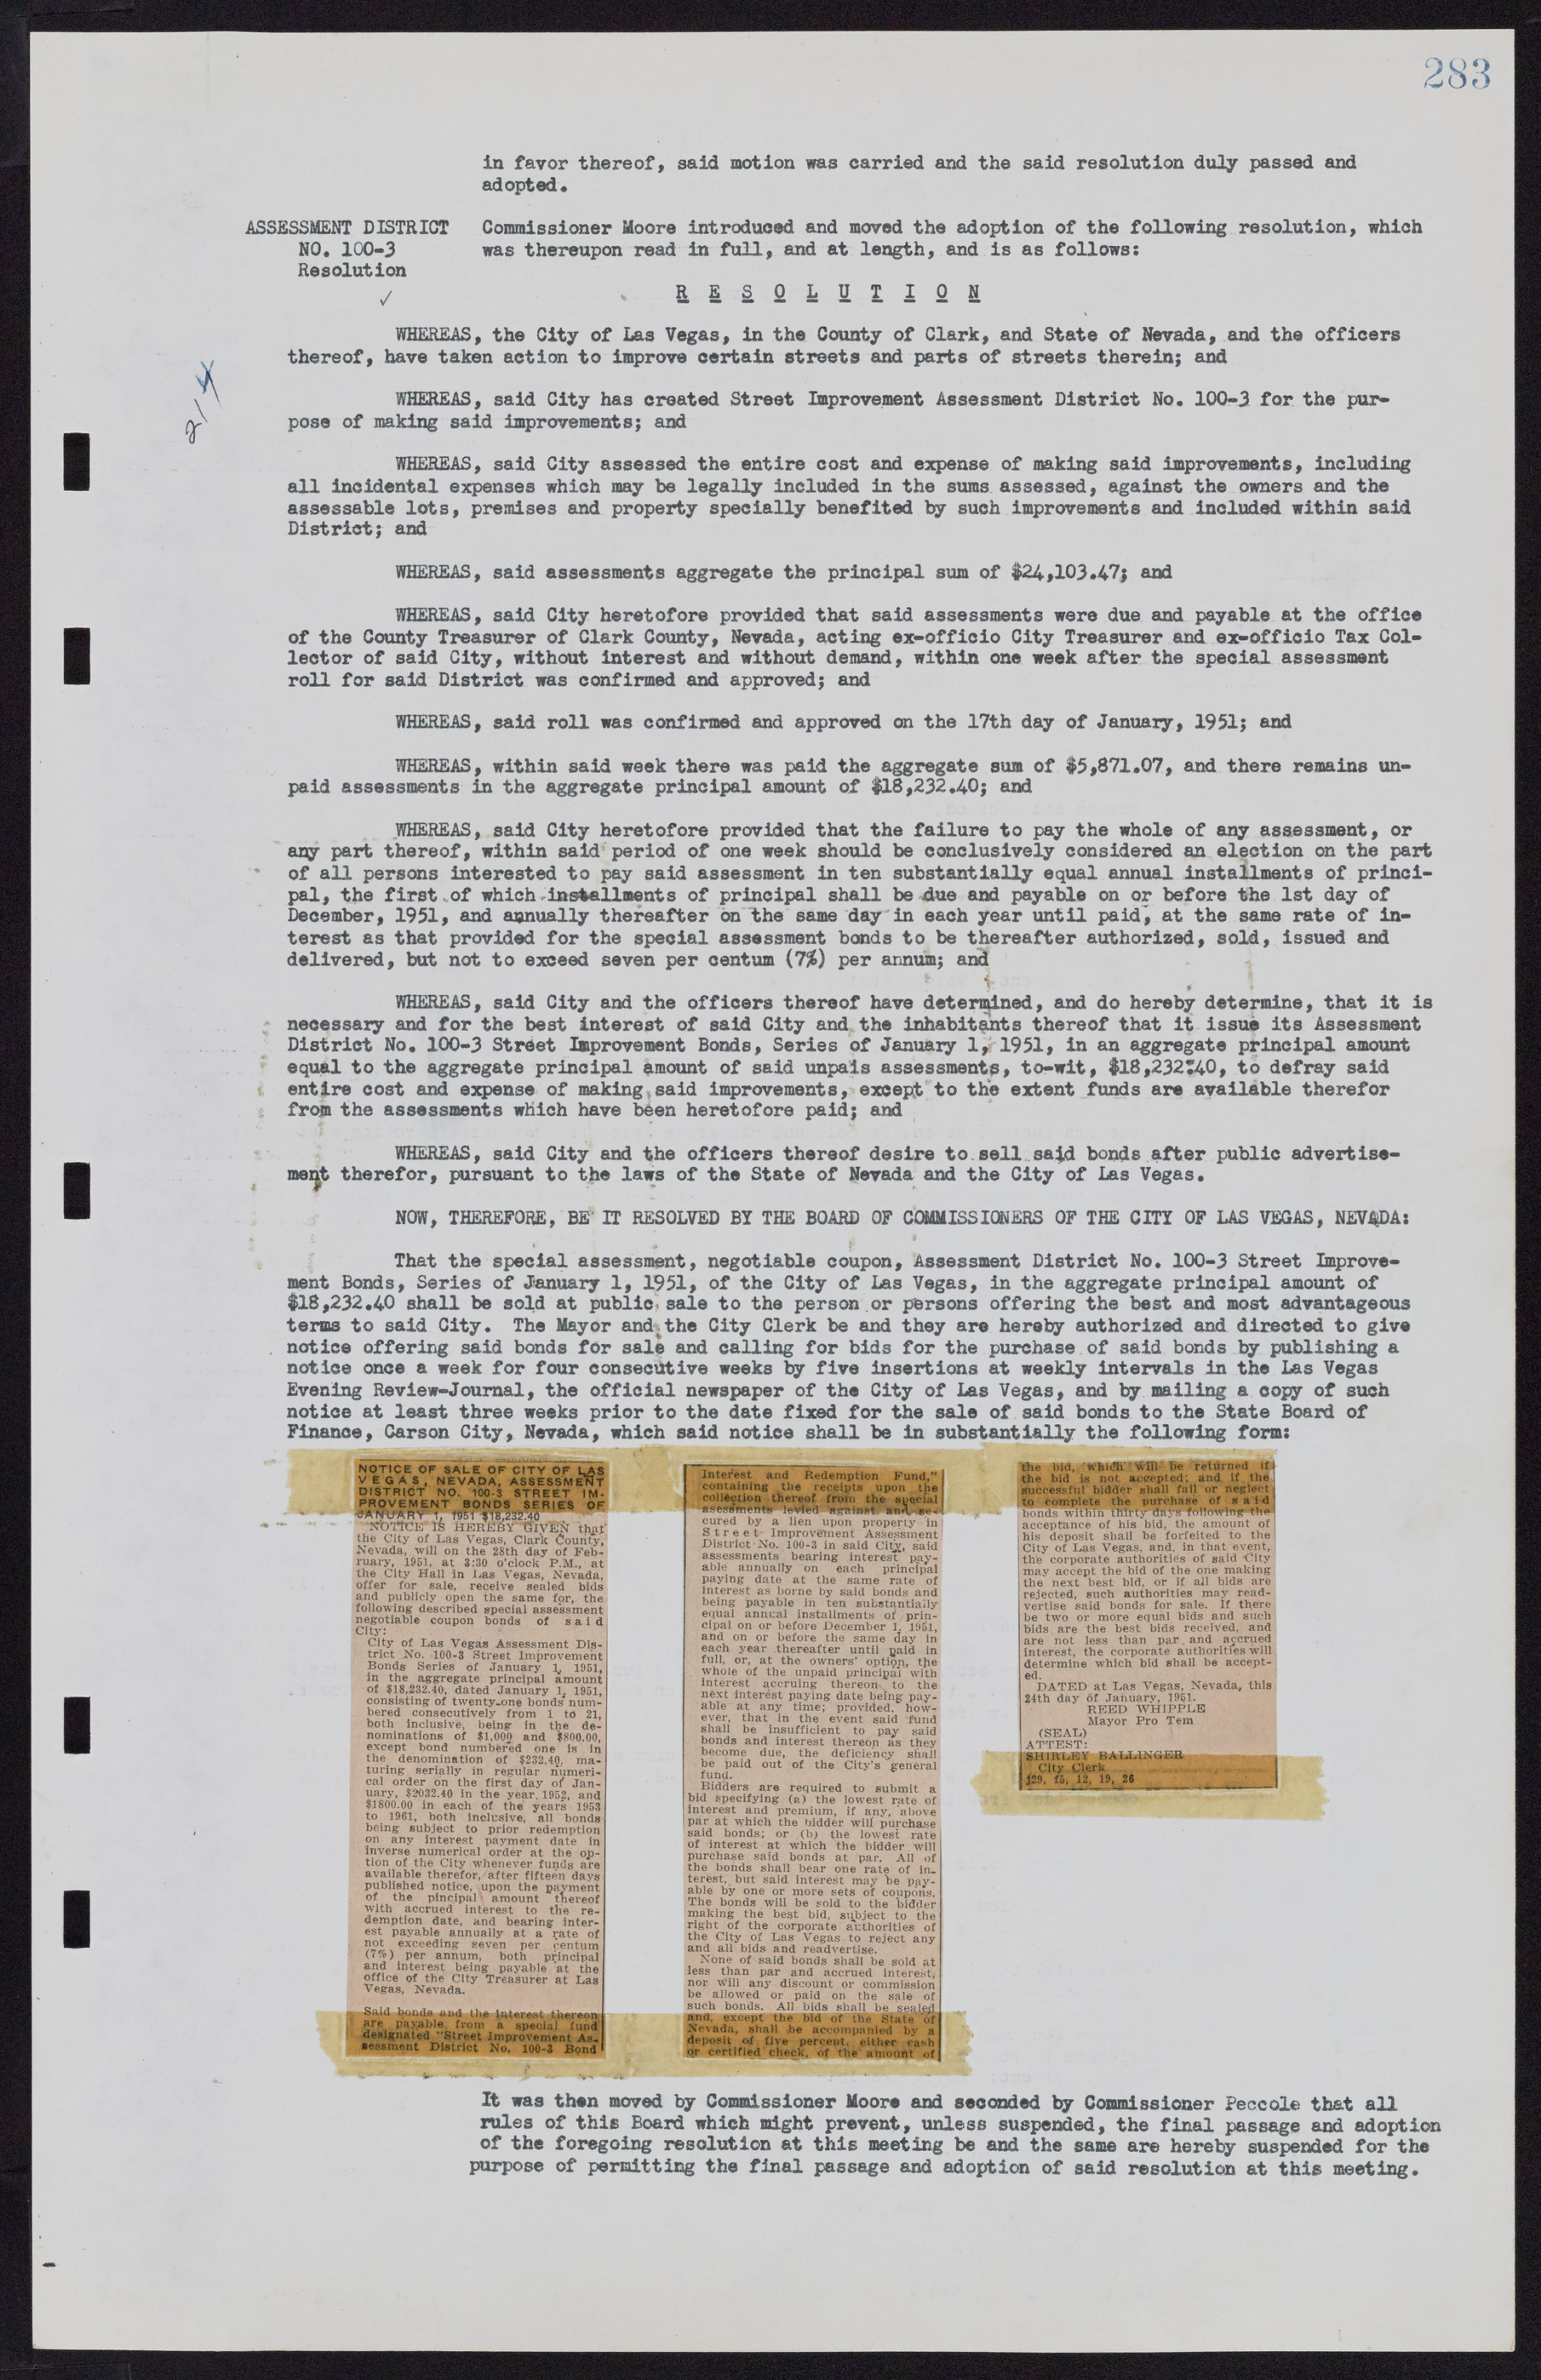 Las Vegas City Commission Minutes, November 7, 1949 to May 21, 1952, lvc000007-295